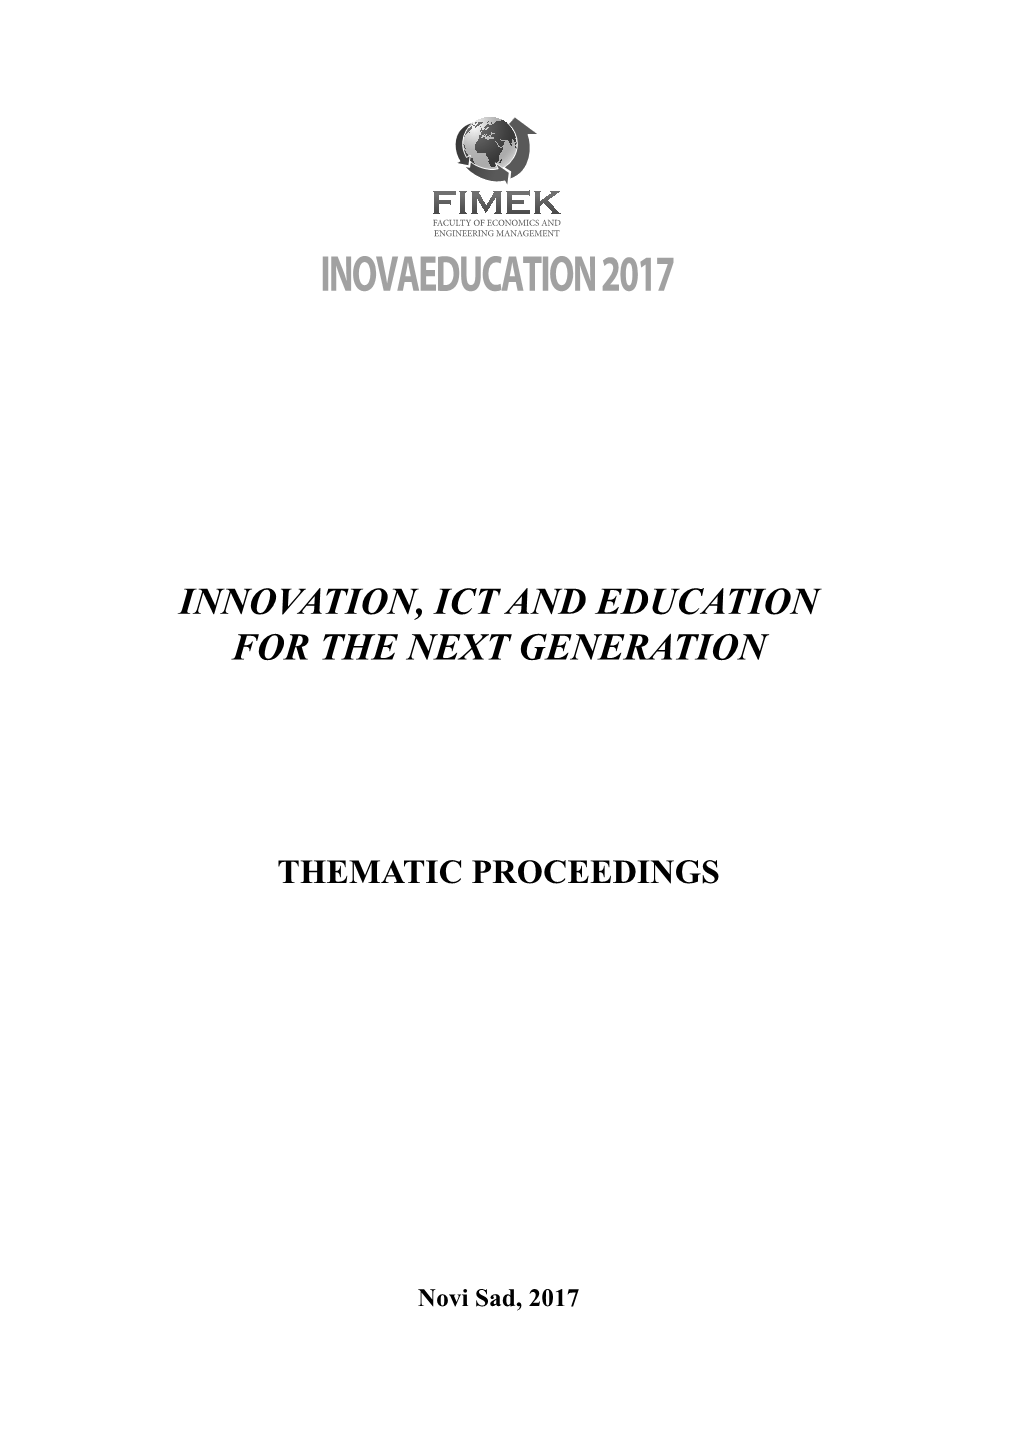 Inovaeducation 2017